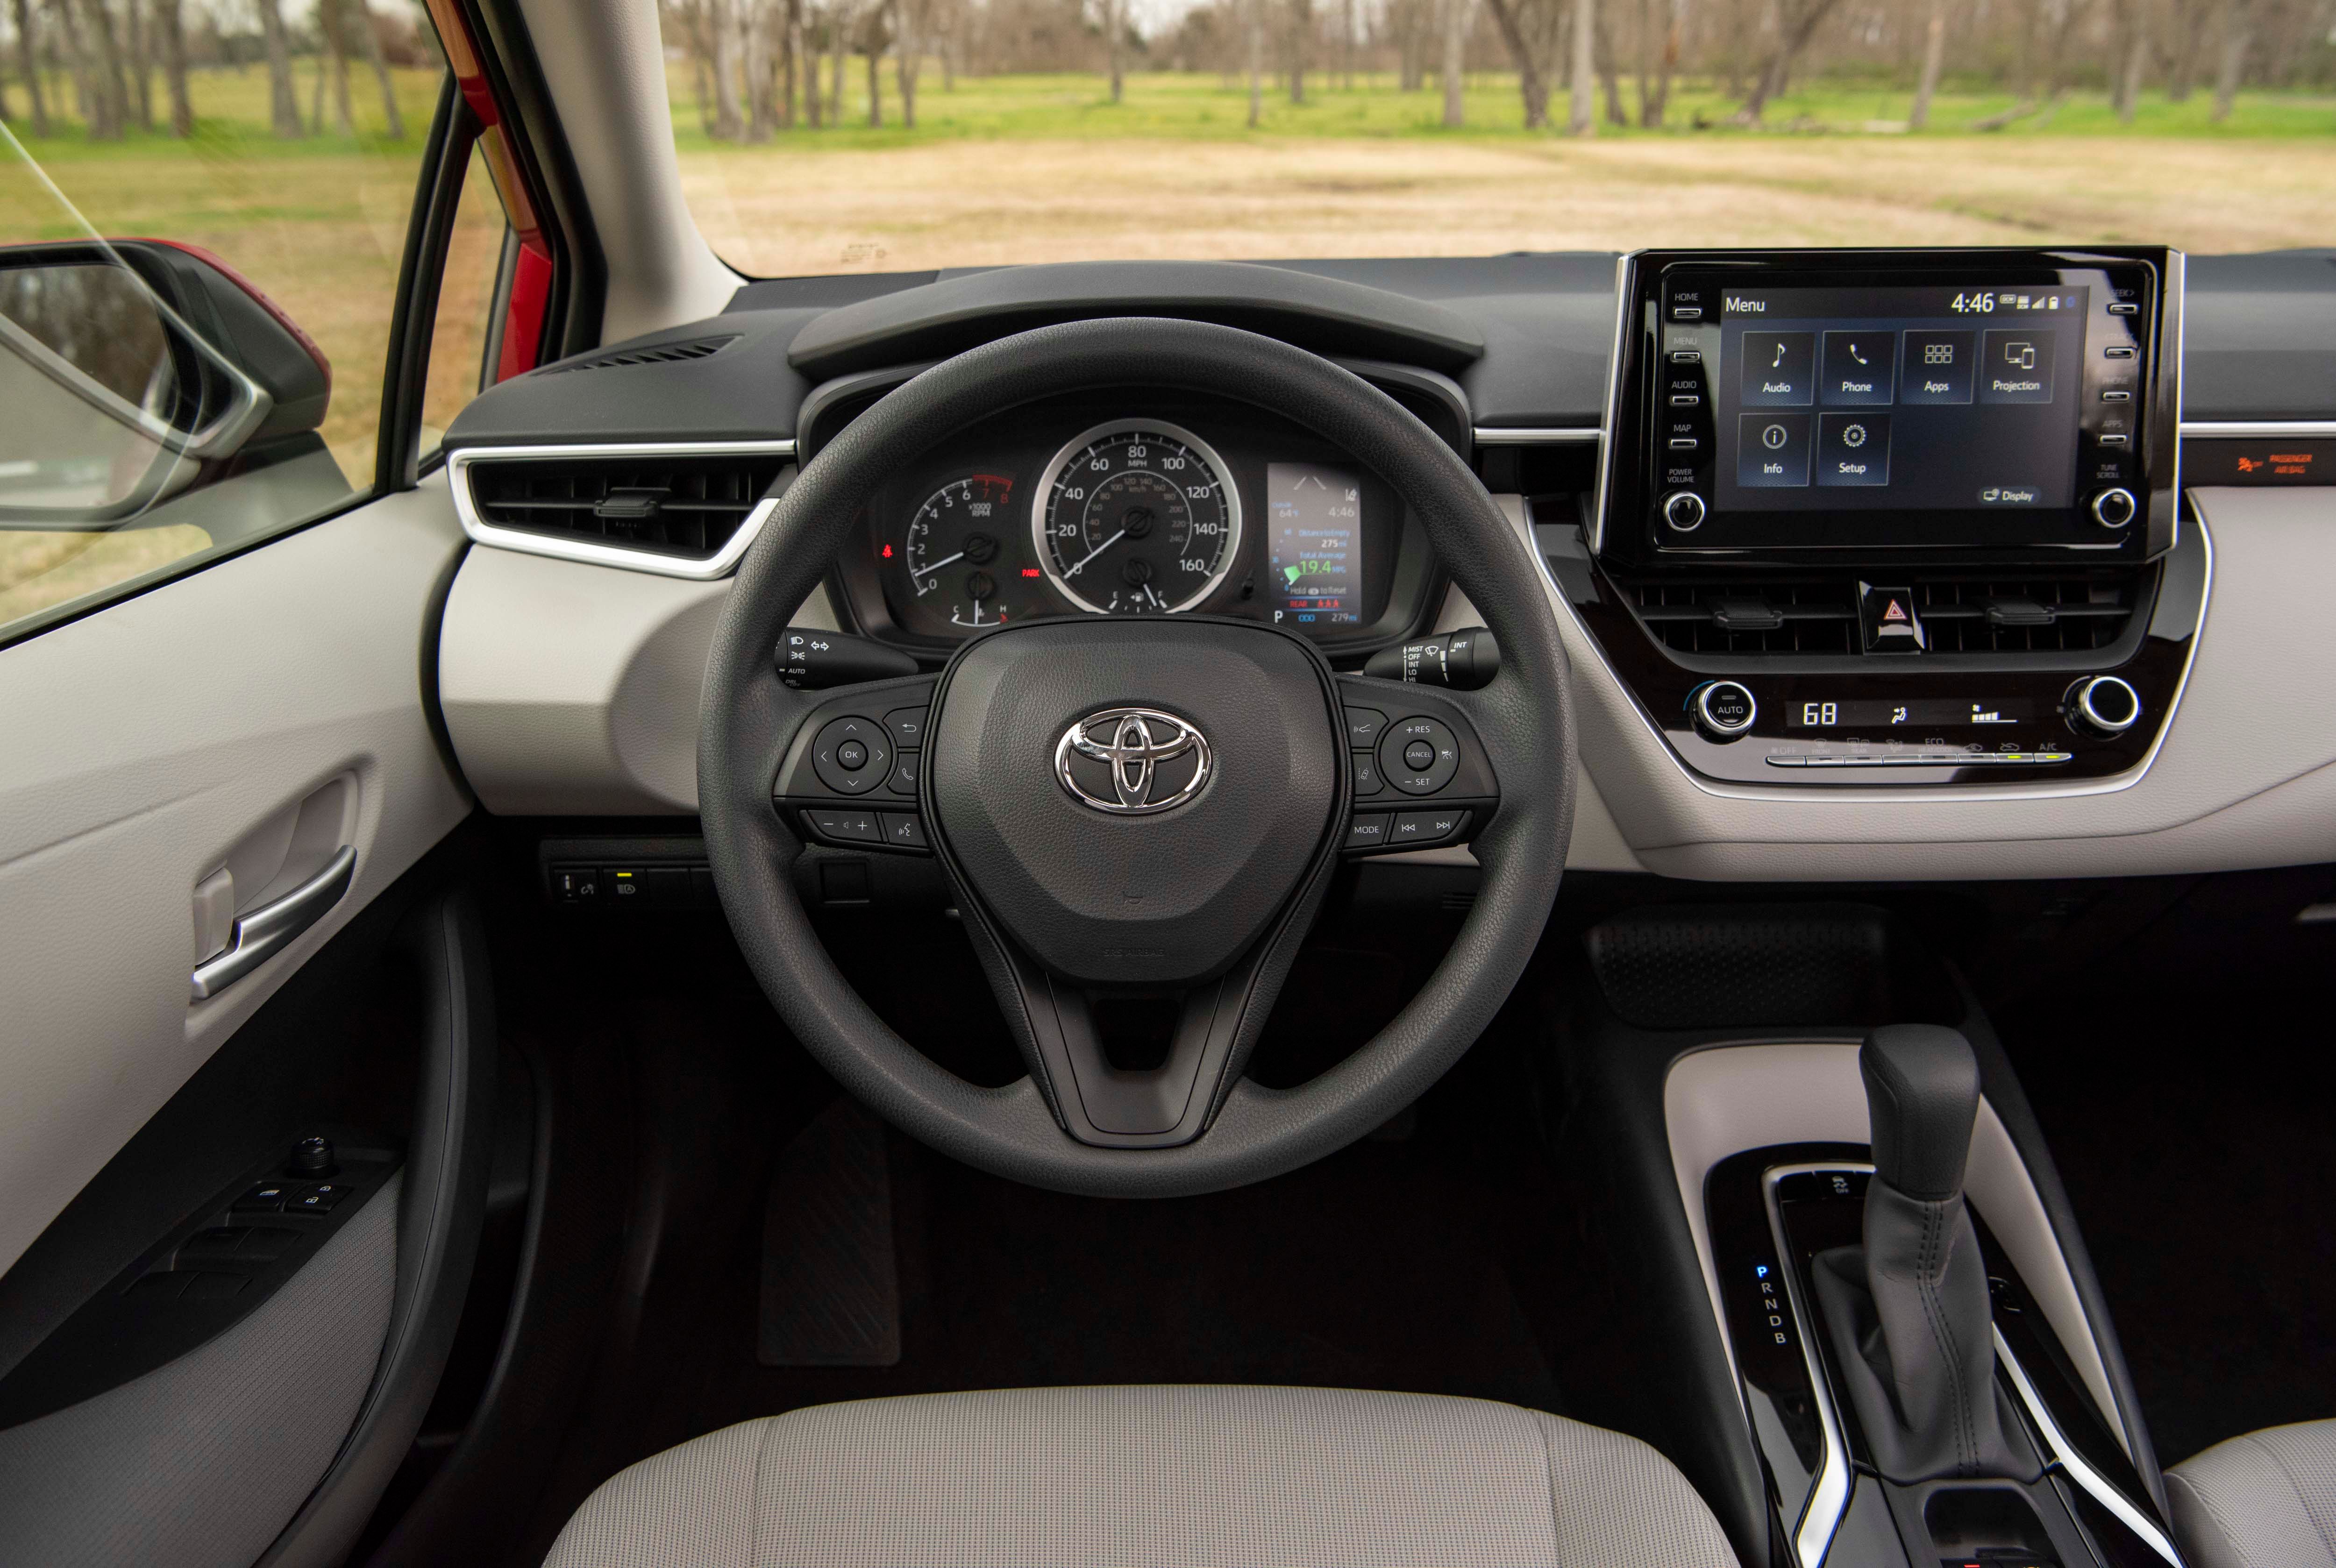 2020 Toyota Corolla Sedan - Driven